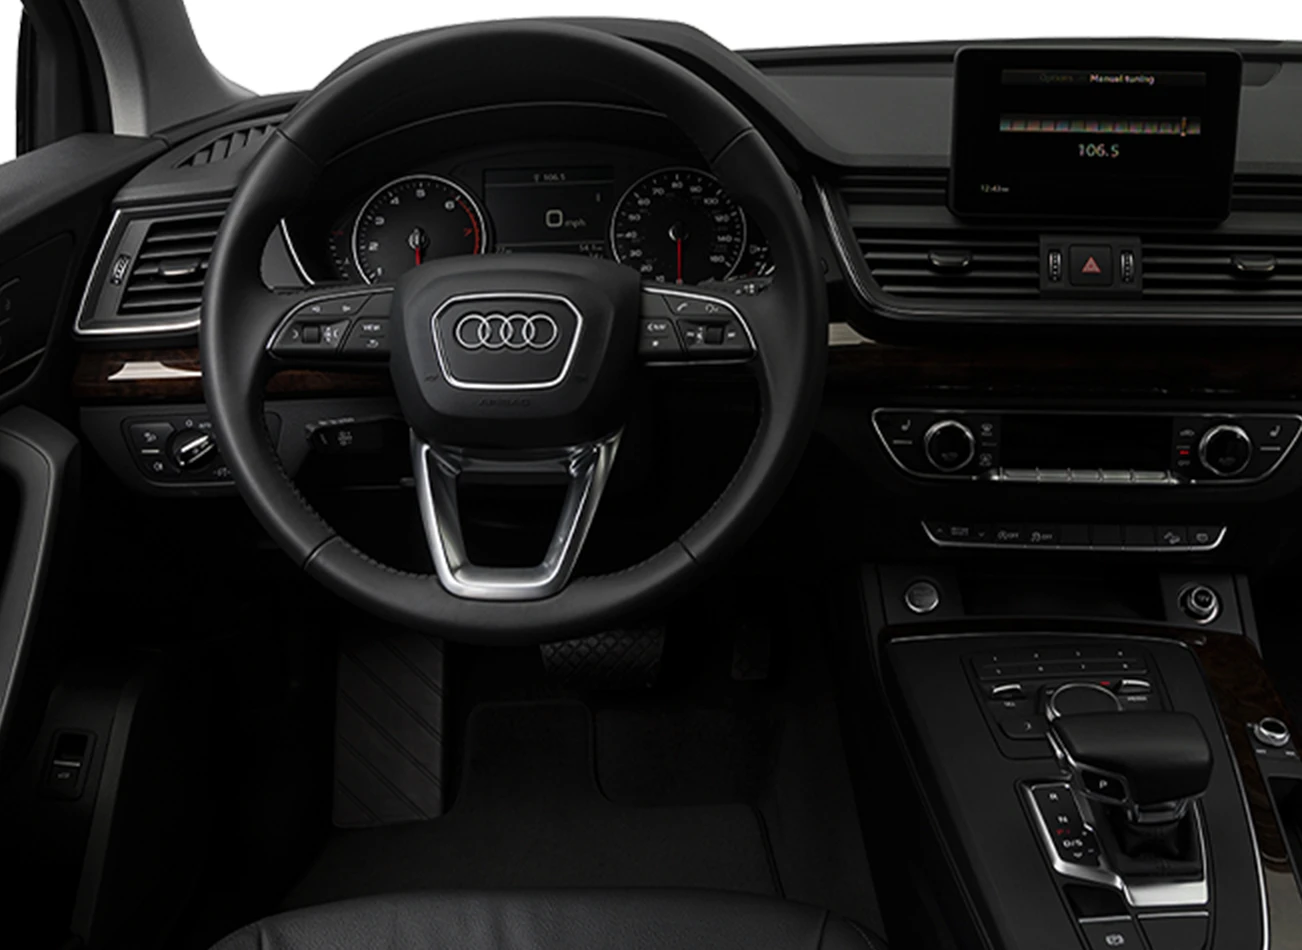 2019 Audi Q5 Review: Reviews, Photos, and More: Reasons to Buy #5 | CarMax